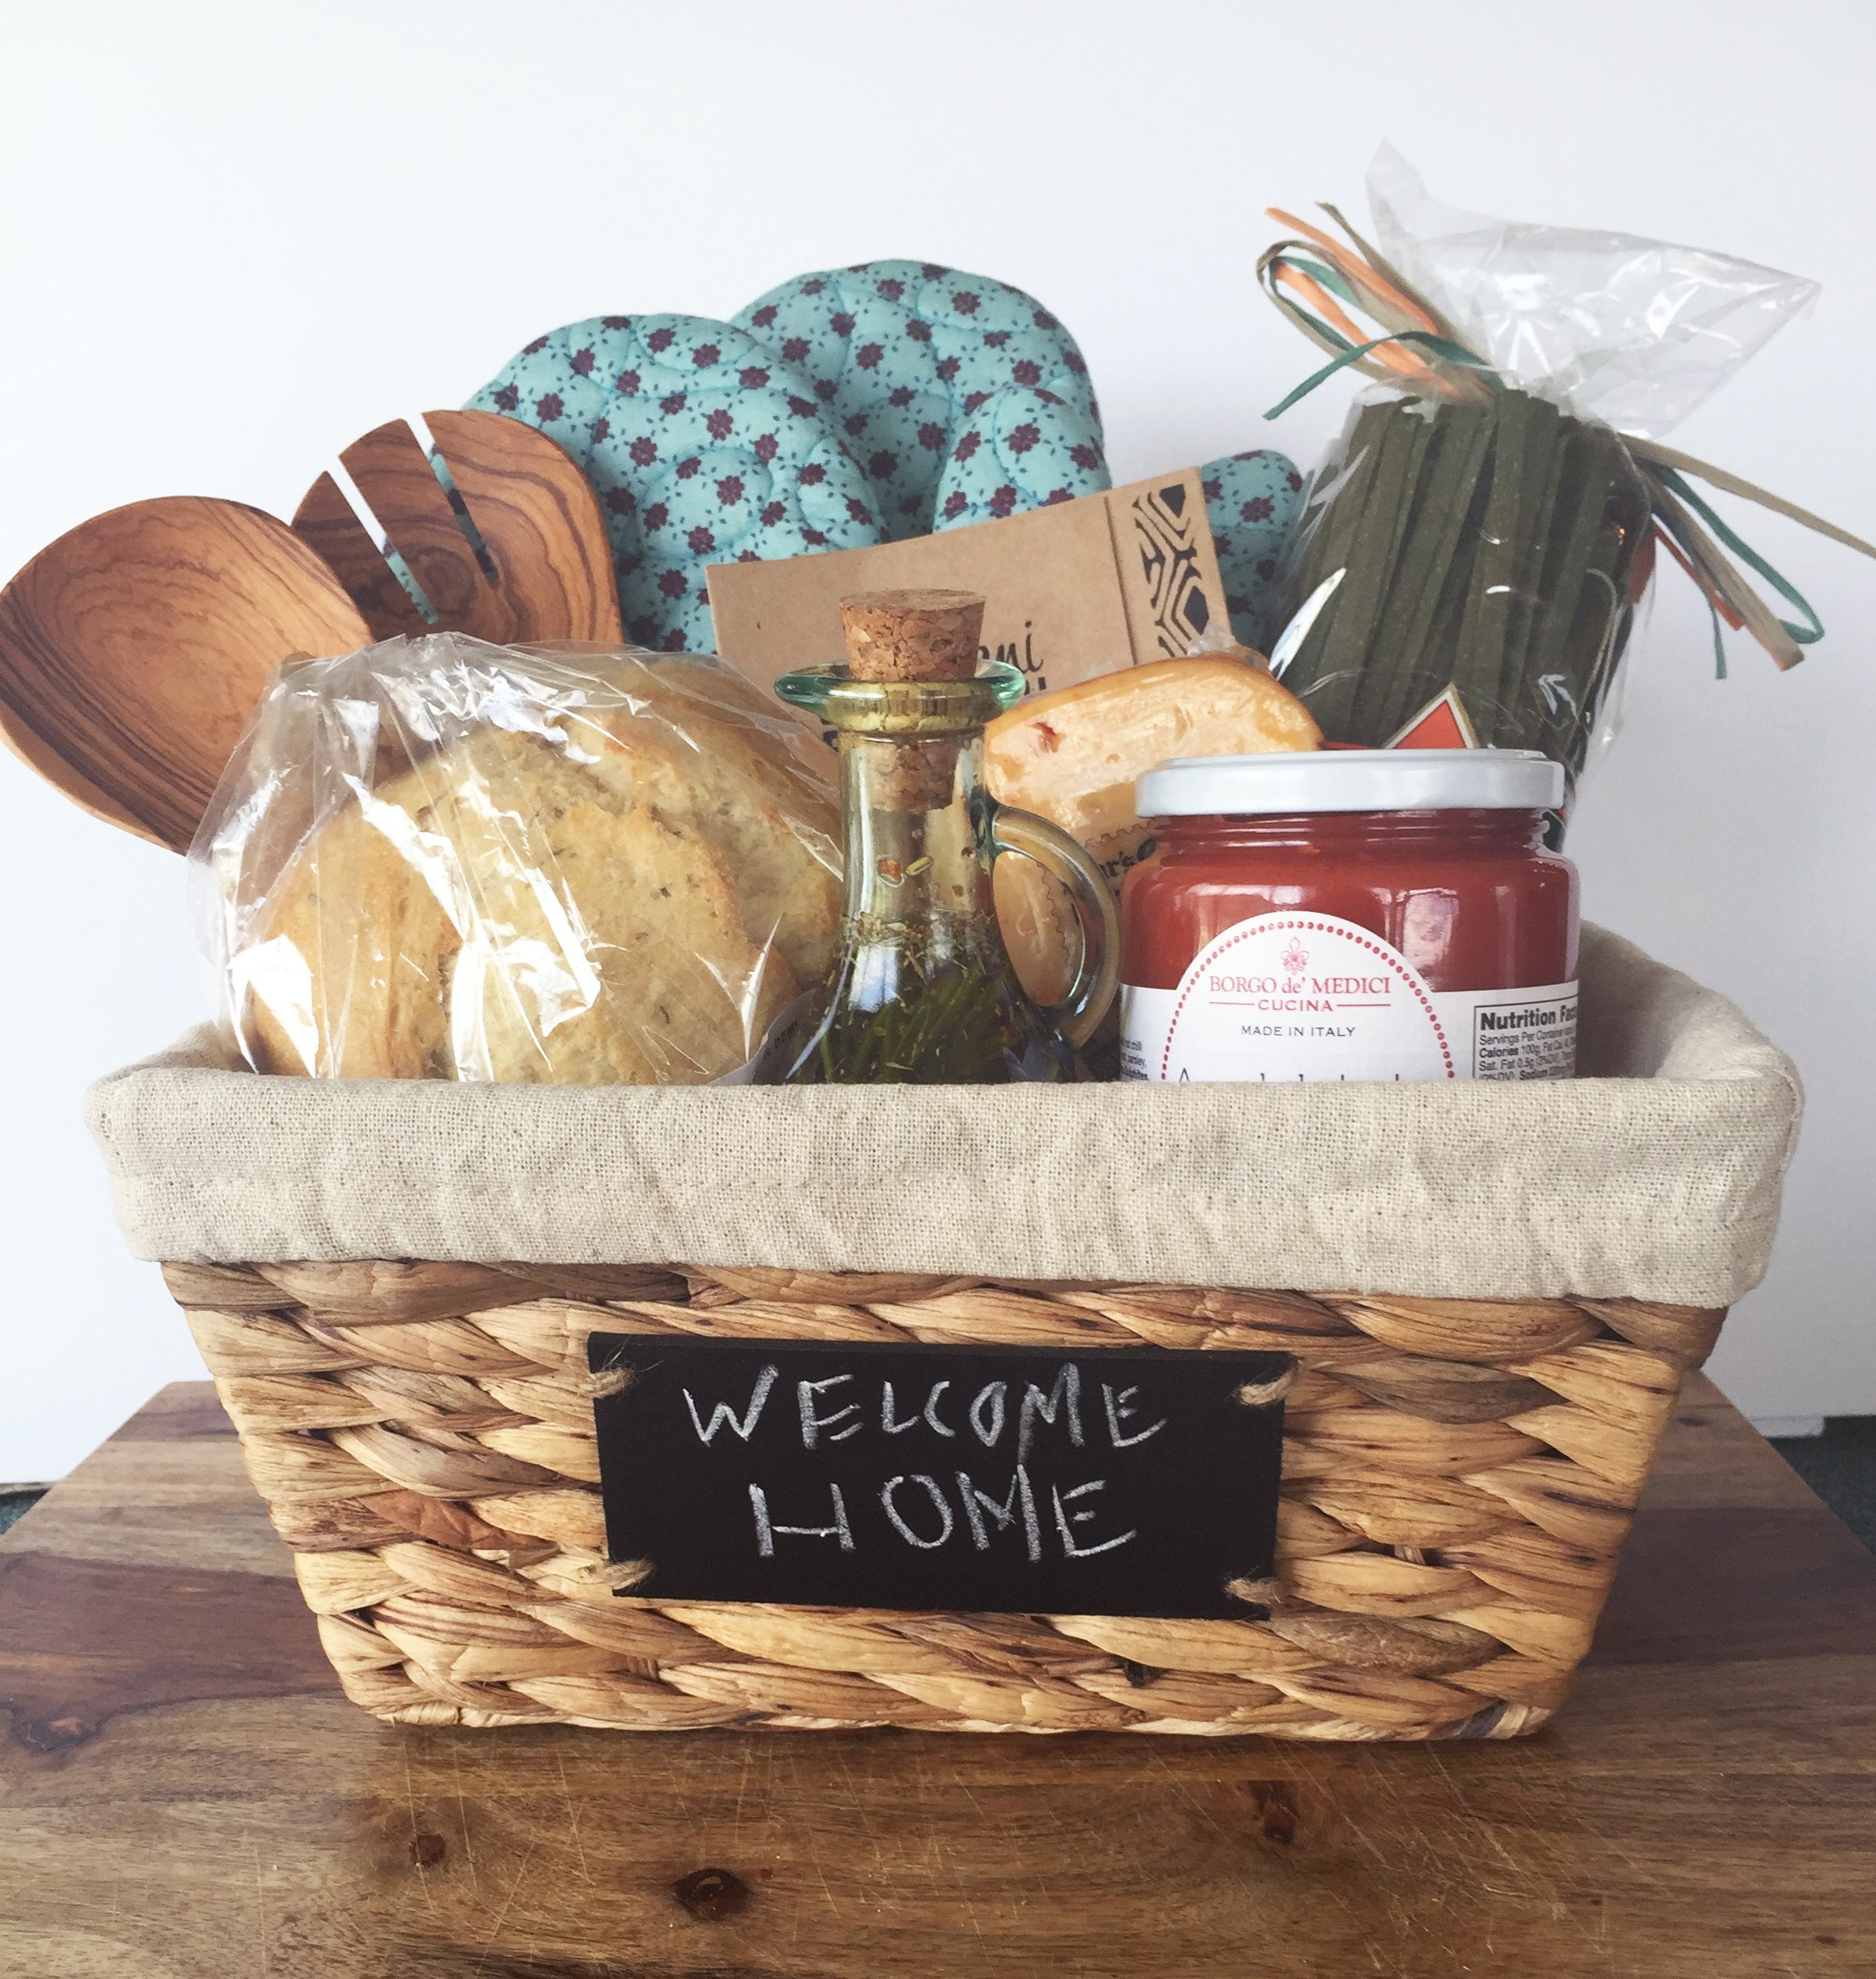 Household Gift Basket Ideas
 DIY HOUSEWARMING GIFT BASKET T A S T Y S O U T H E R N